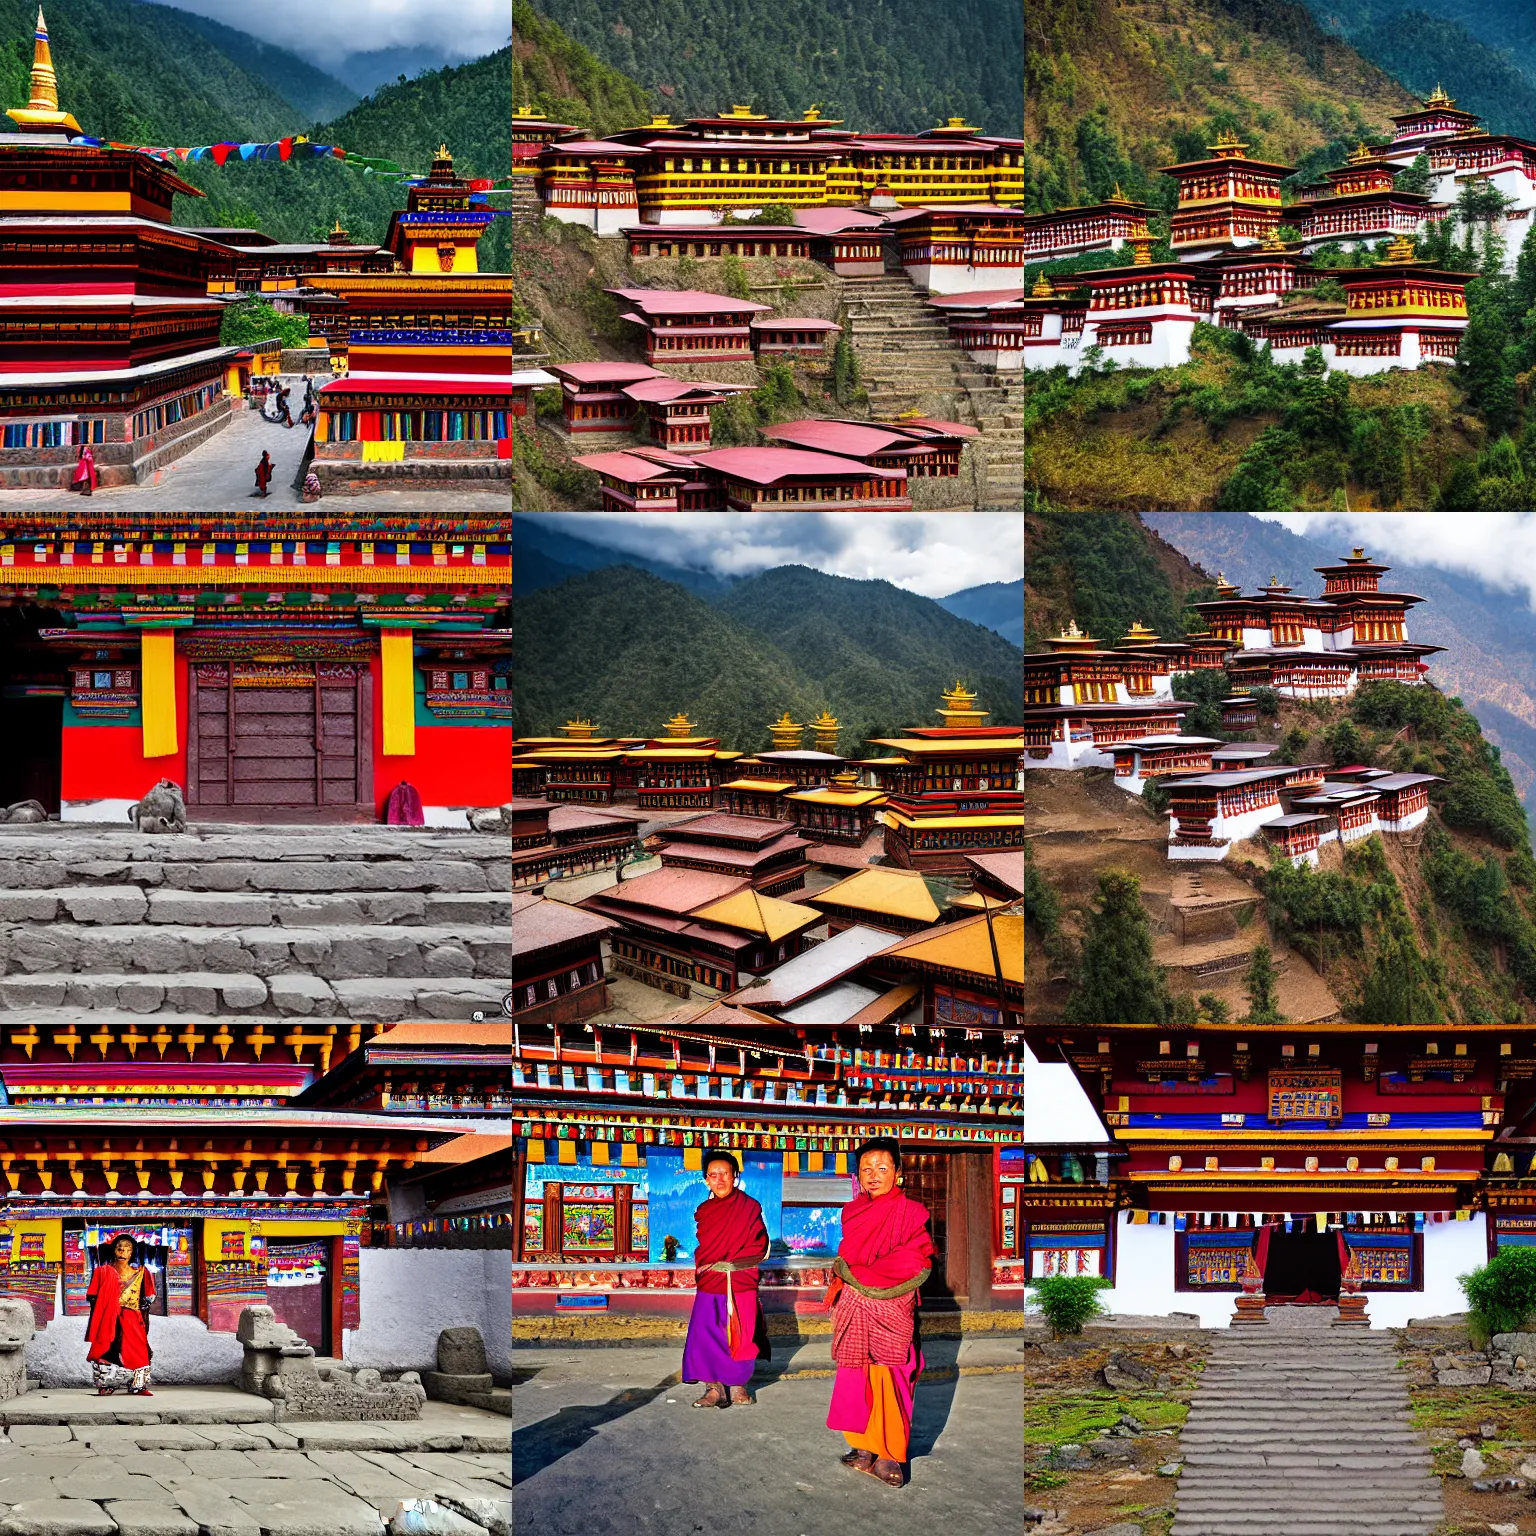 Prompt: an award - winning, high quality, high fidelity image of thimpu, bhutan. capital of bhutan, national geographic. high quality artisan photograph. film